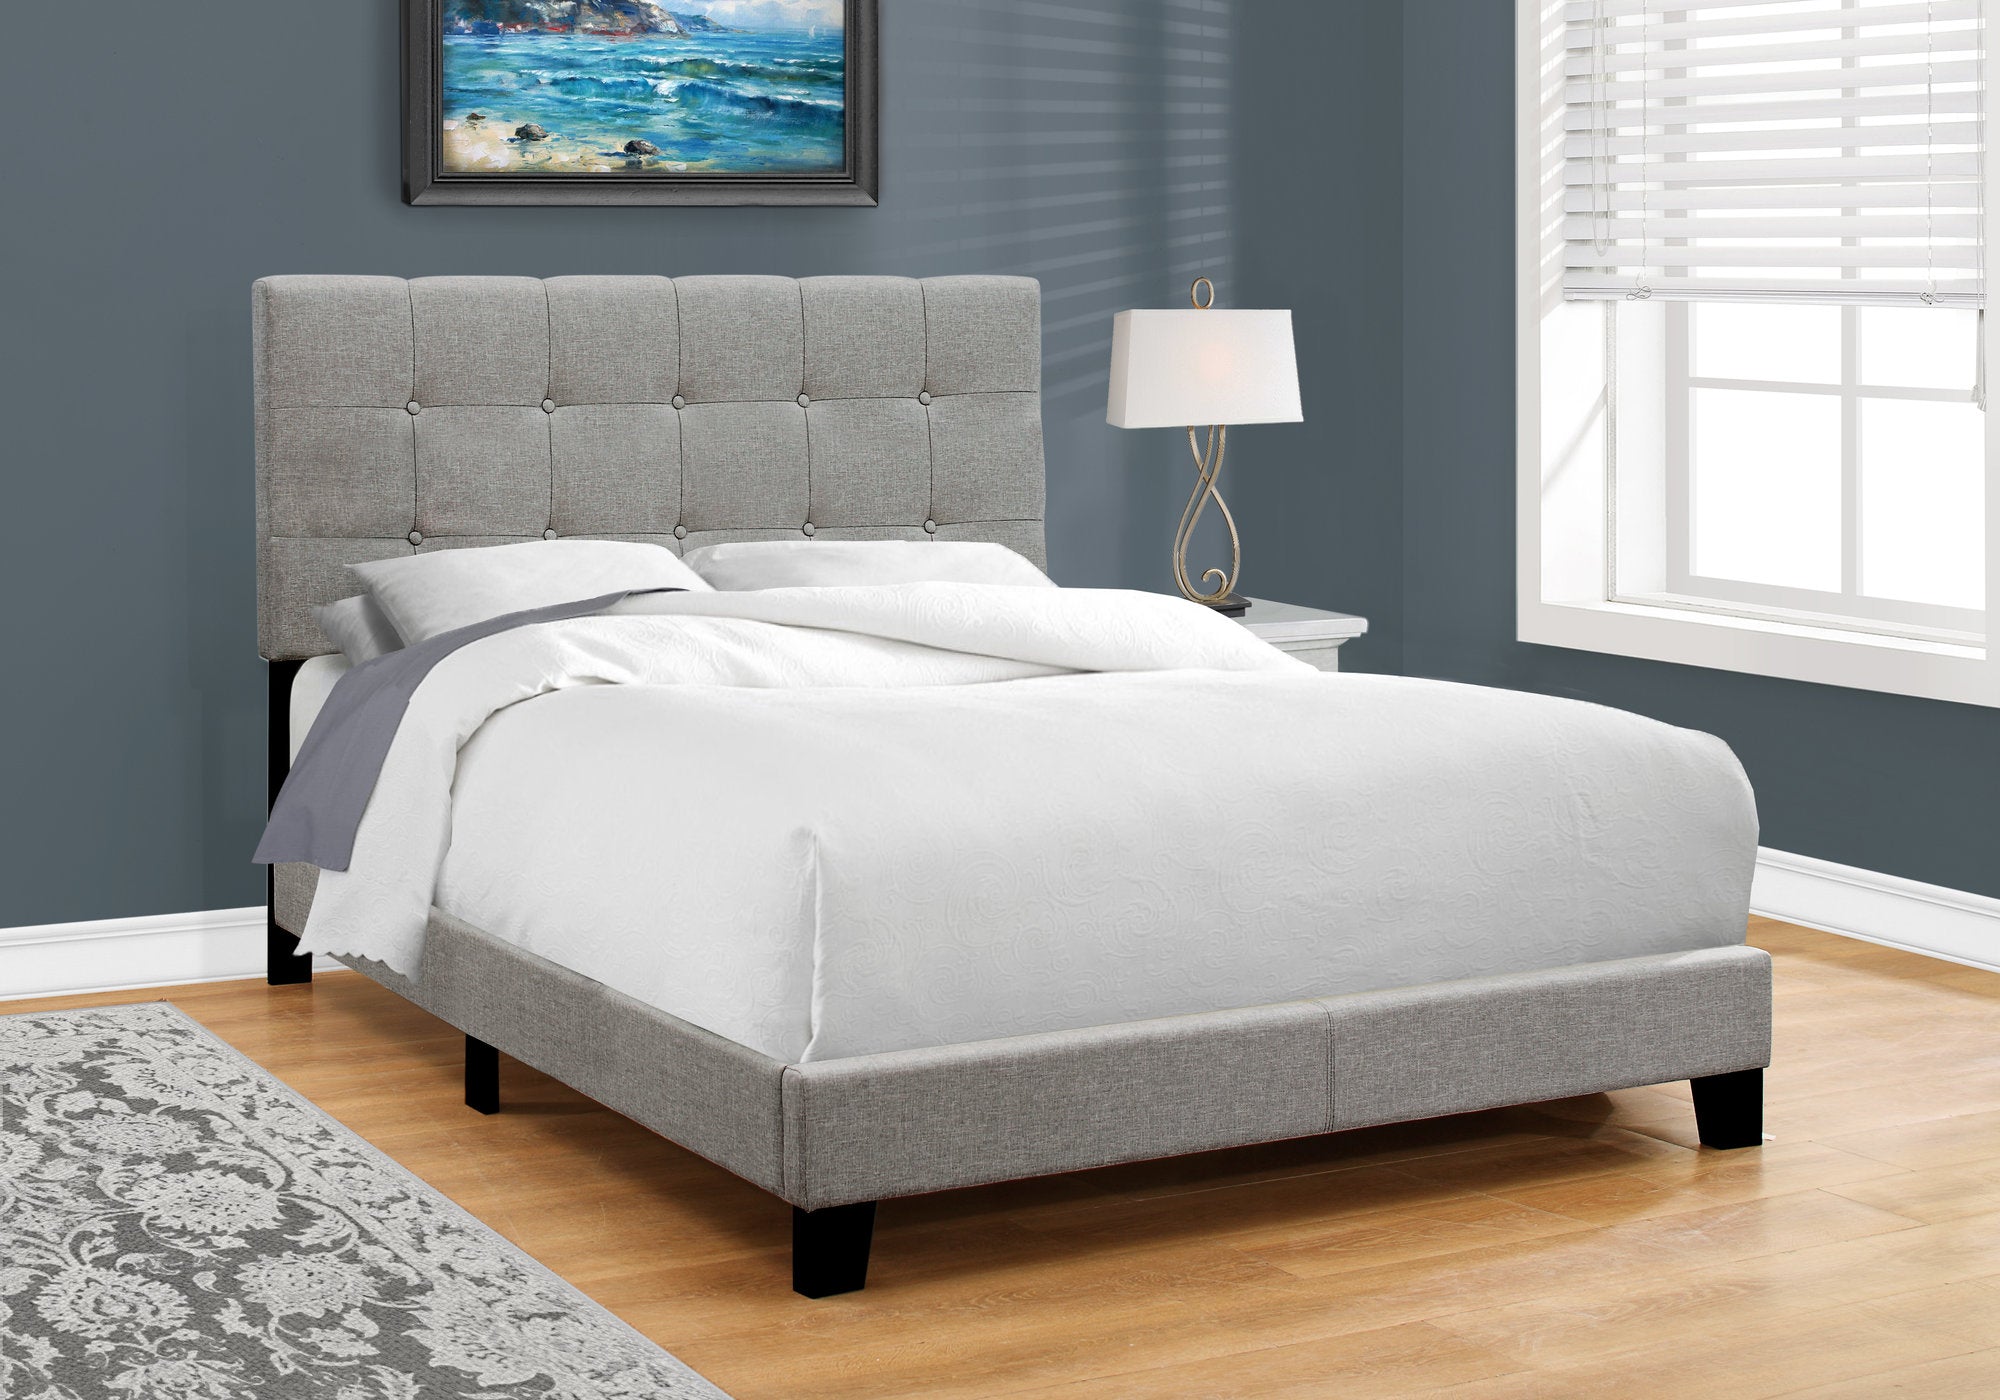 MN-925920F    Bed, Frame, Platform, Bedroom, Full Size, Upholstered, Linen Look Fabric, Wood Legs, Grey, Black, Contemporary, Modern